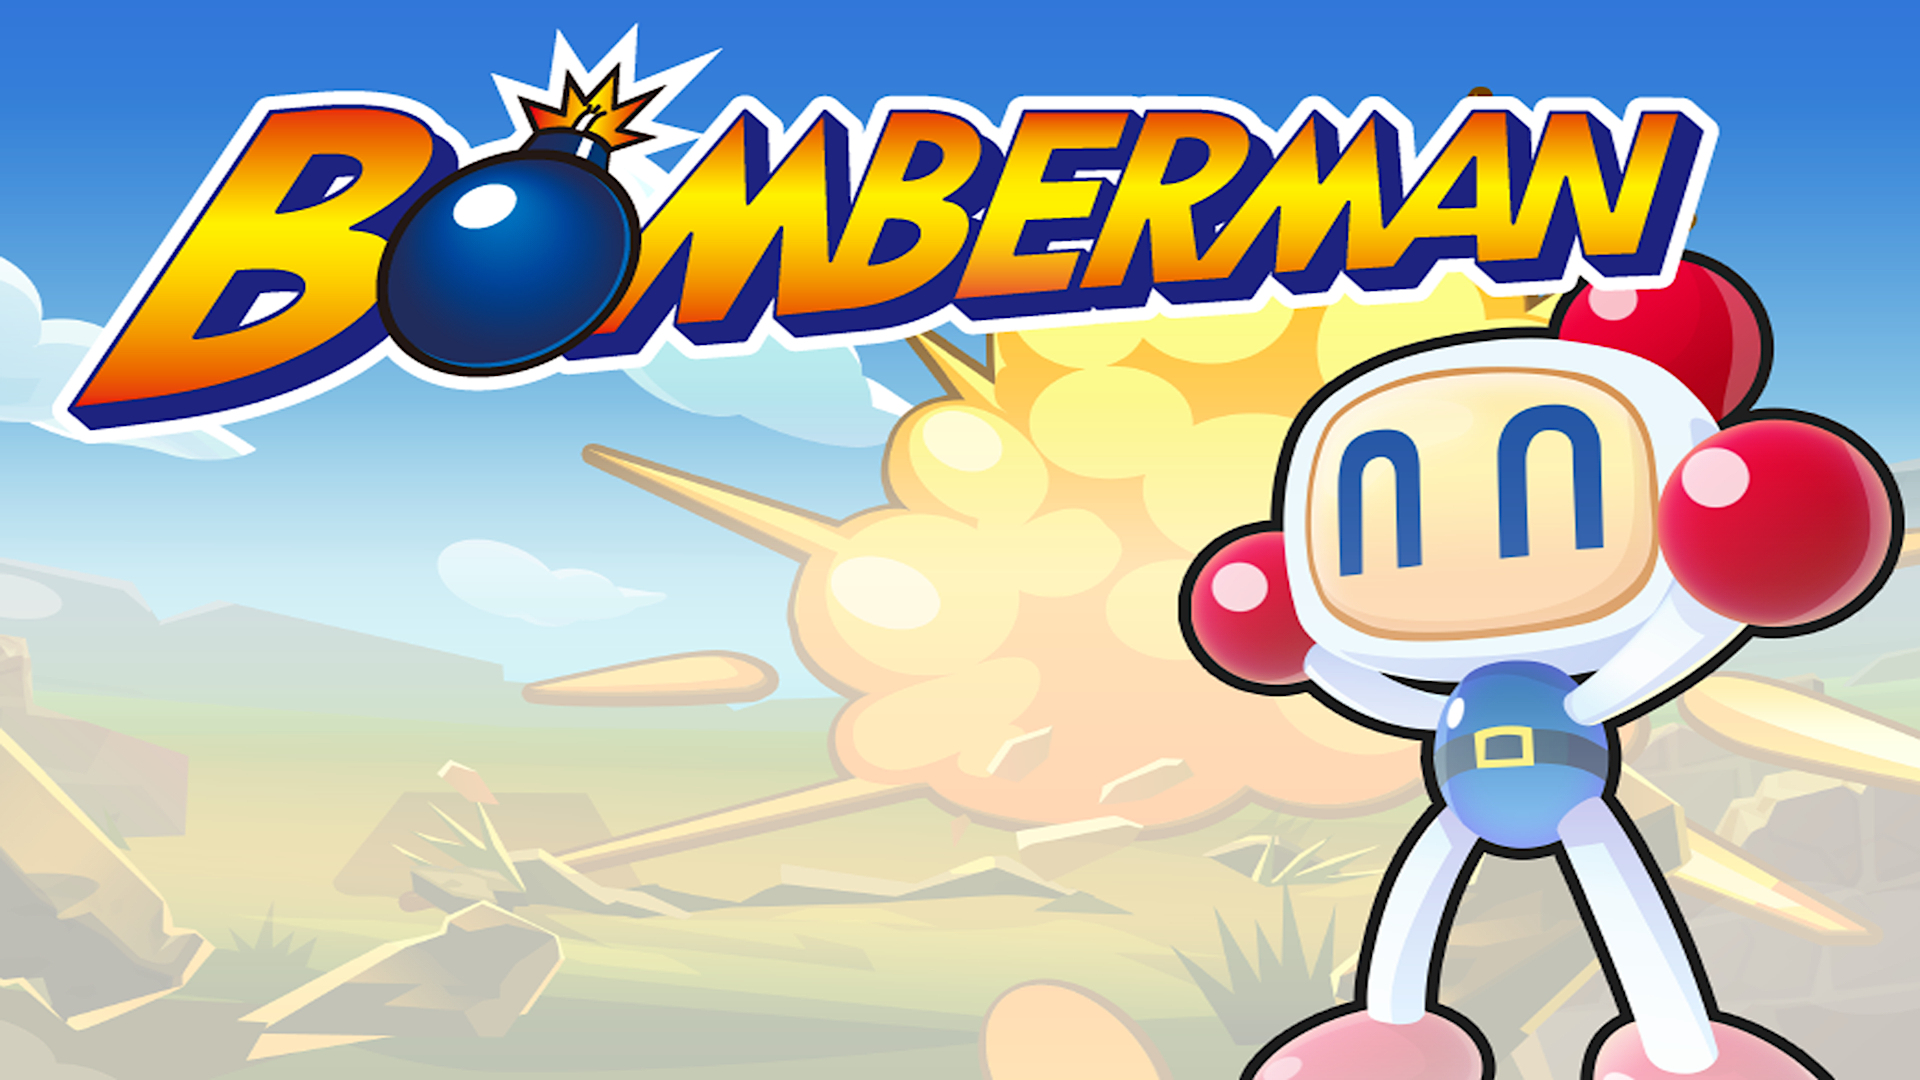 Bomberman Online Images - LaunchBox Games Database